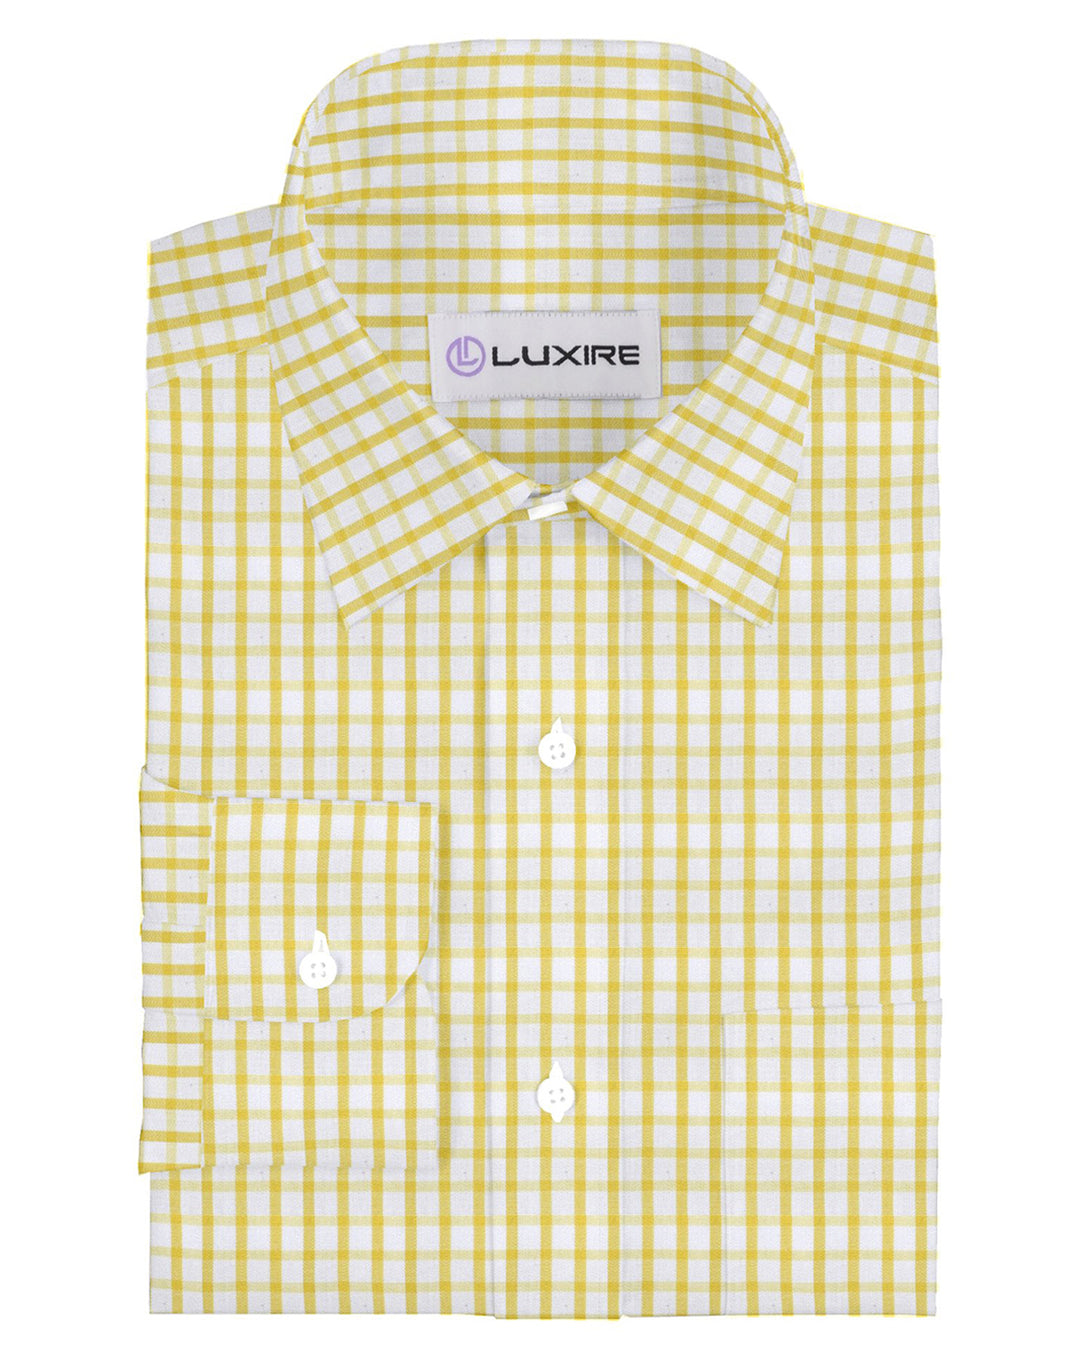 Friday Shirt: Yellow Graph Checks